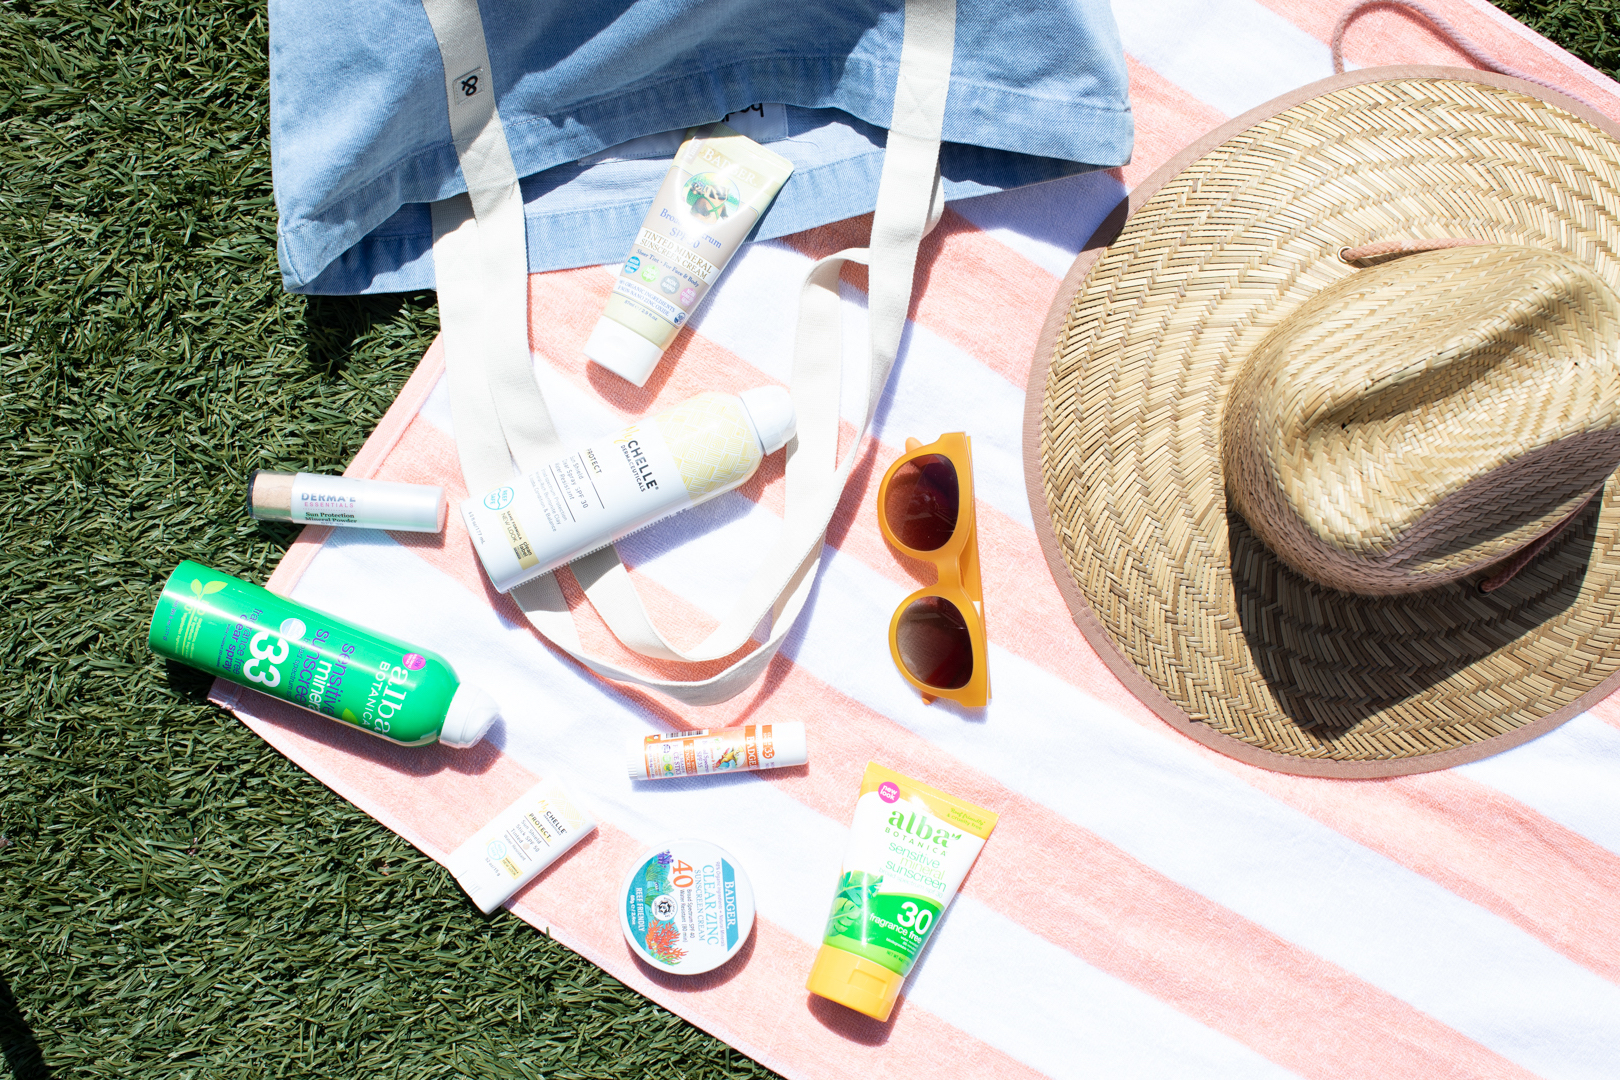 Sunscreens on a beach towel